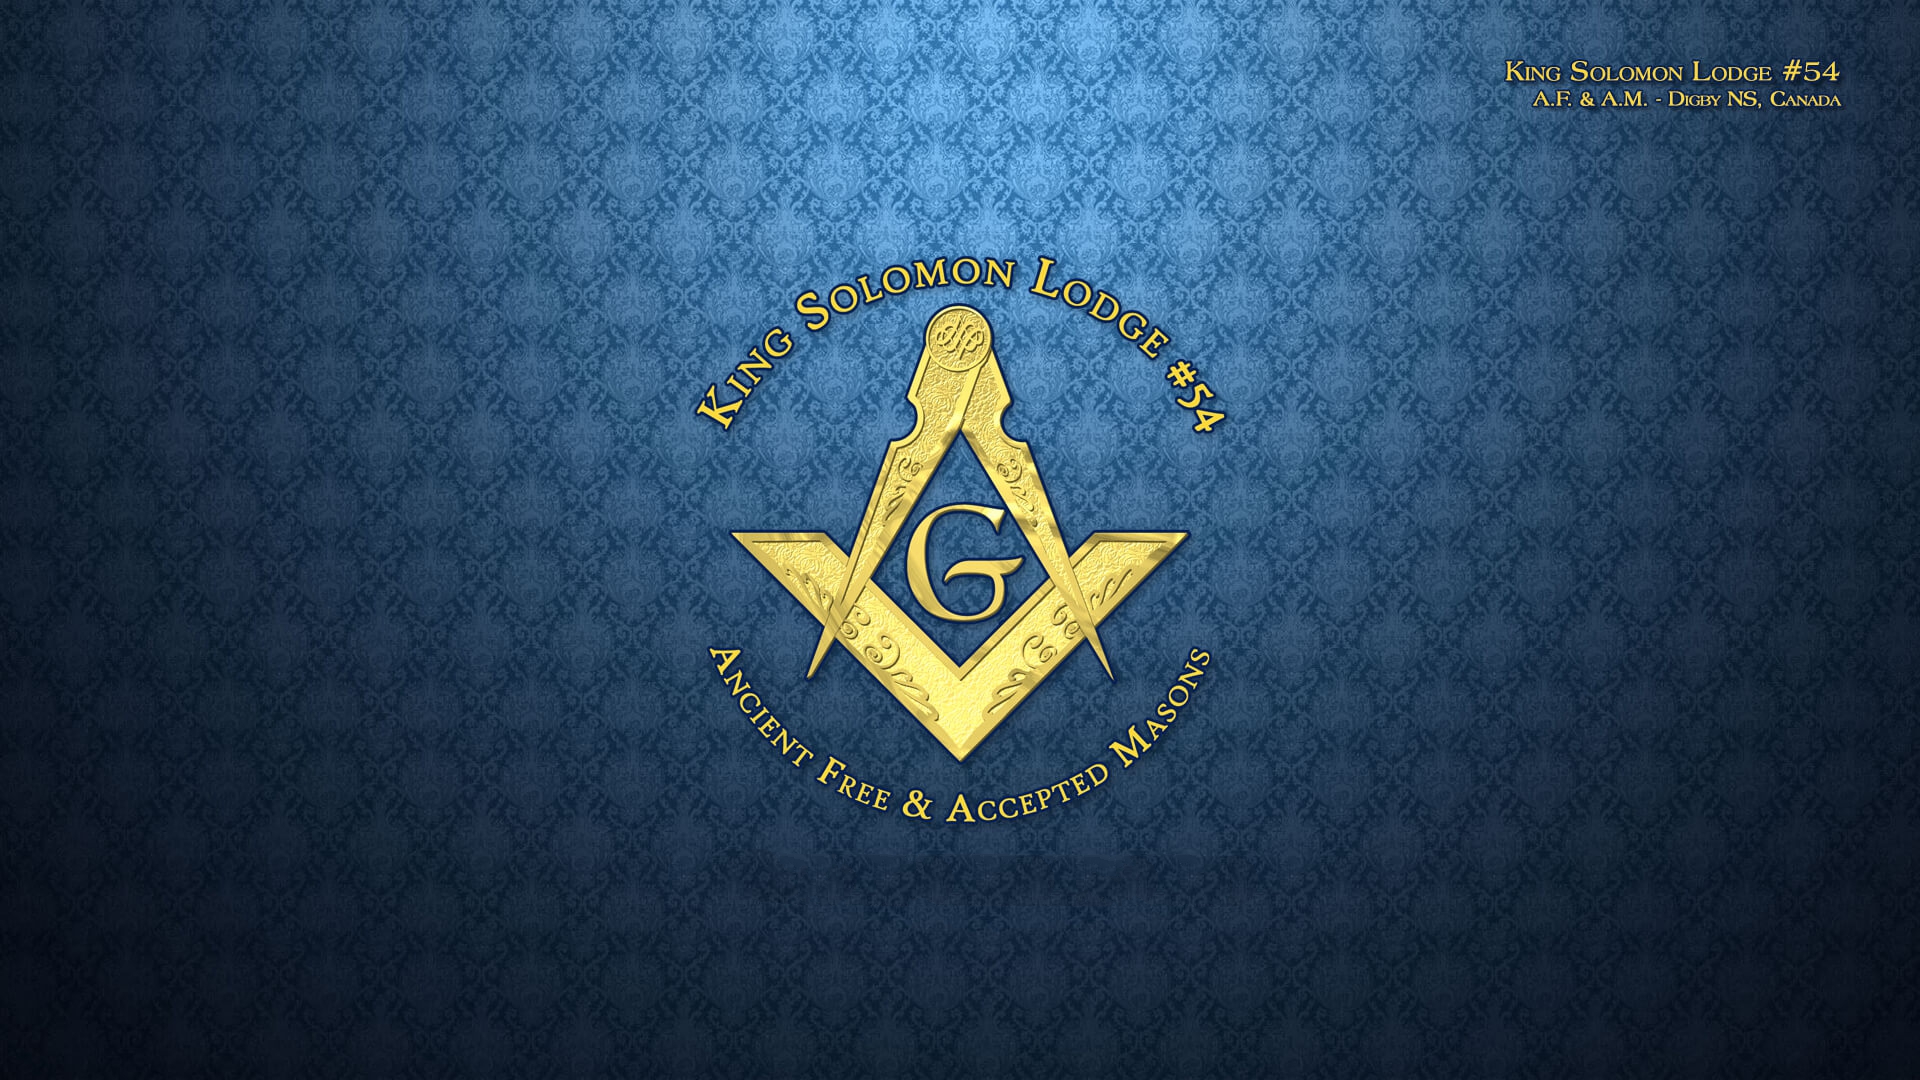 Download Free Masonic Backgrounds | PixelsTalk.Net